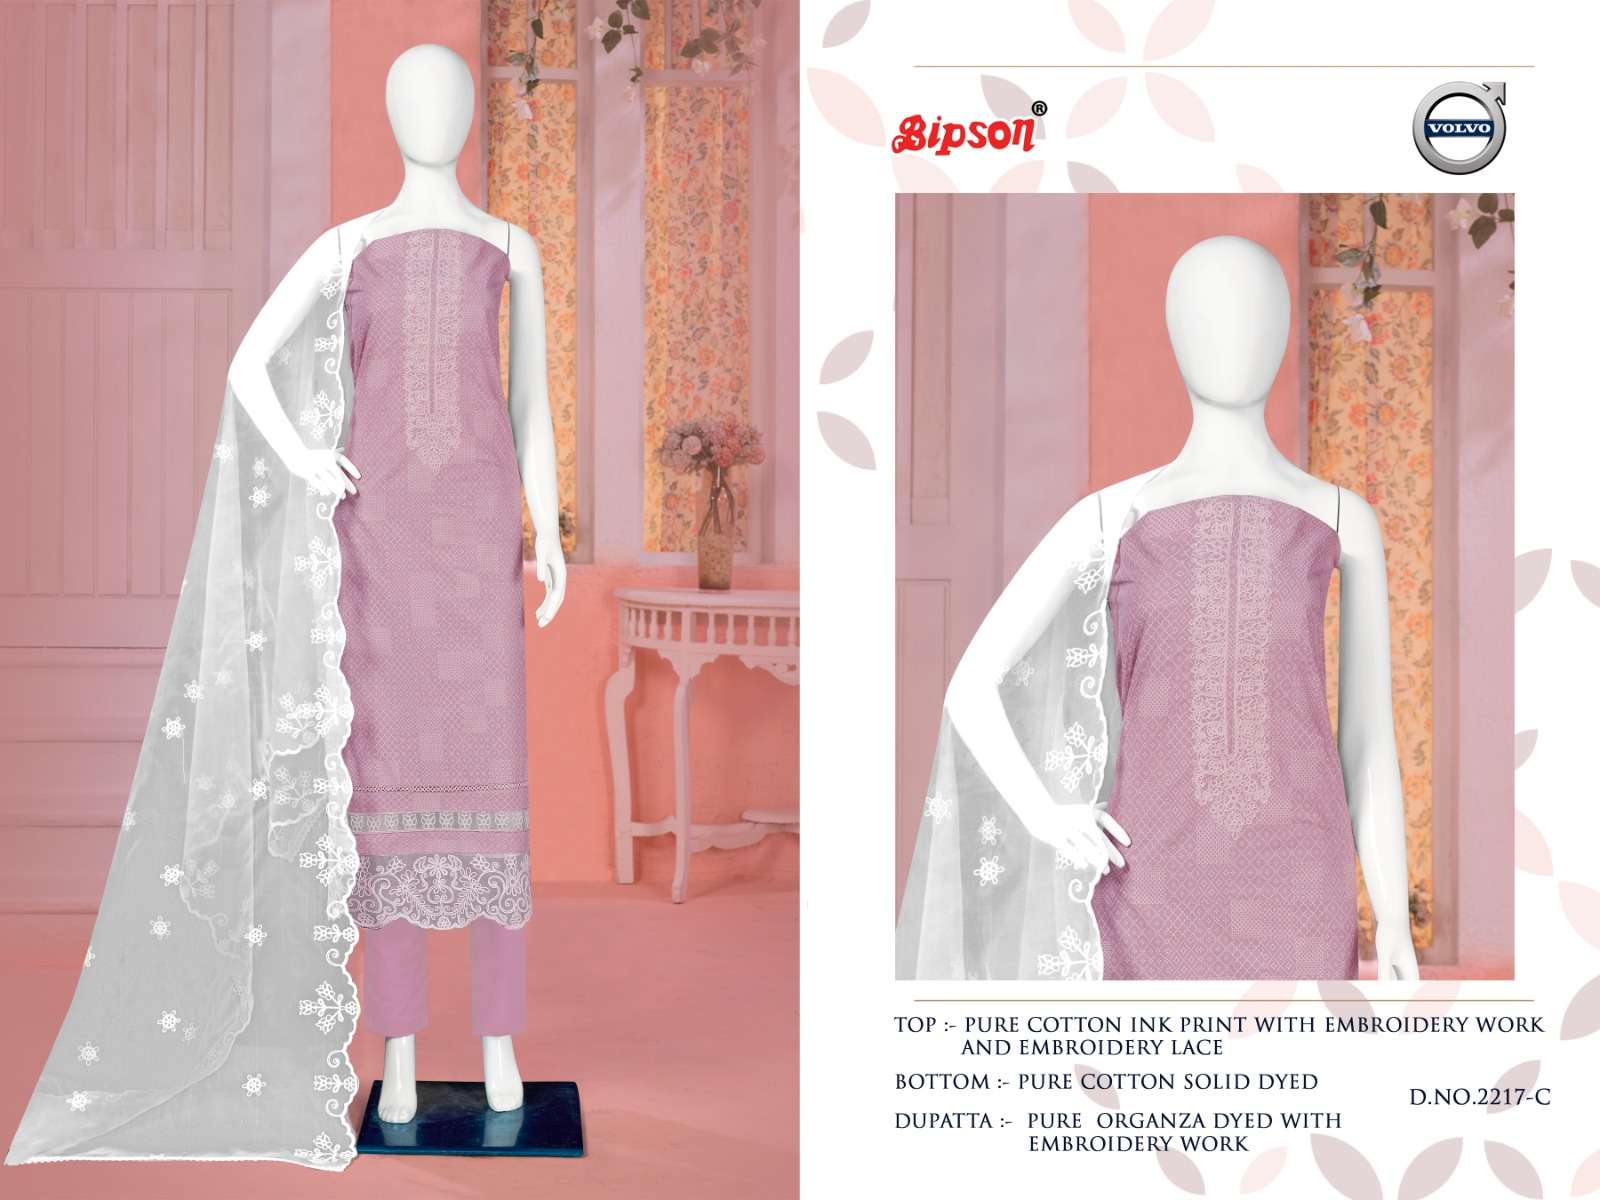 bipson prints volvo 2217 series unstitched designer swalwar suits catalogue online dealer surat 